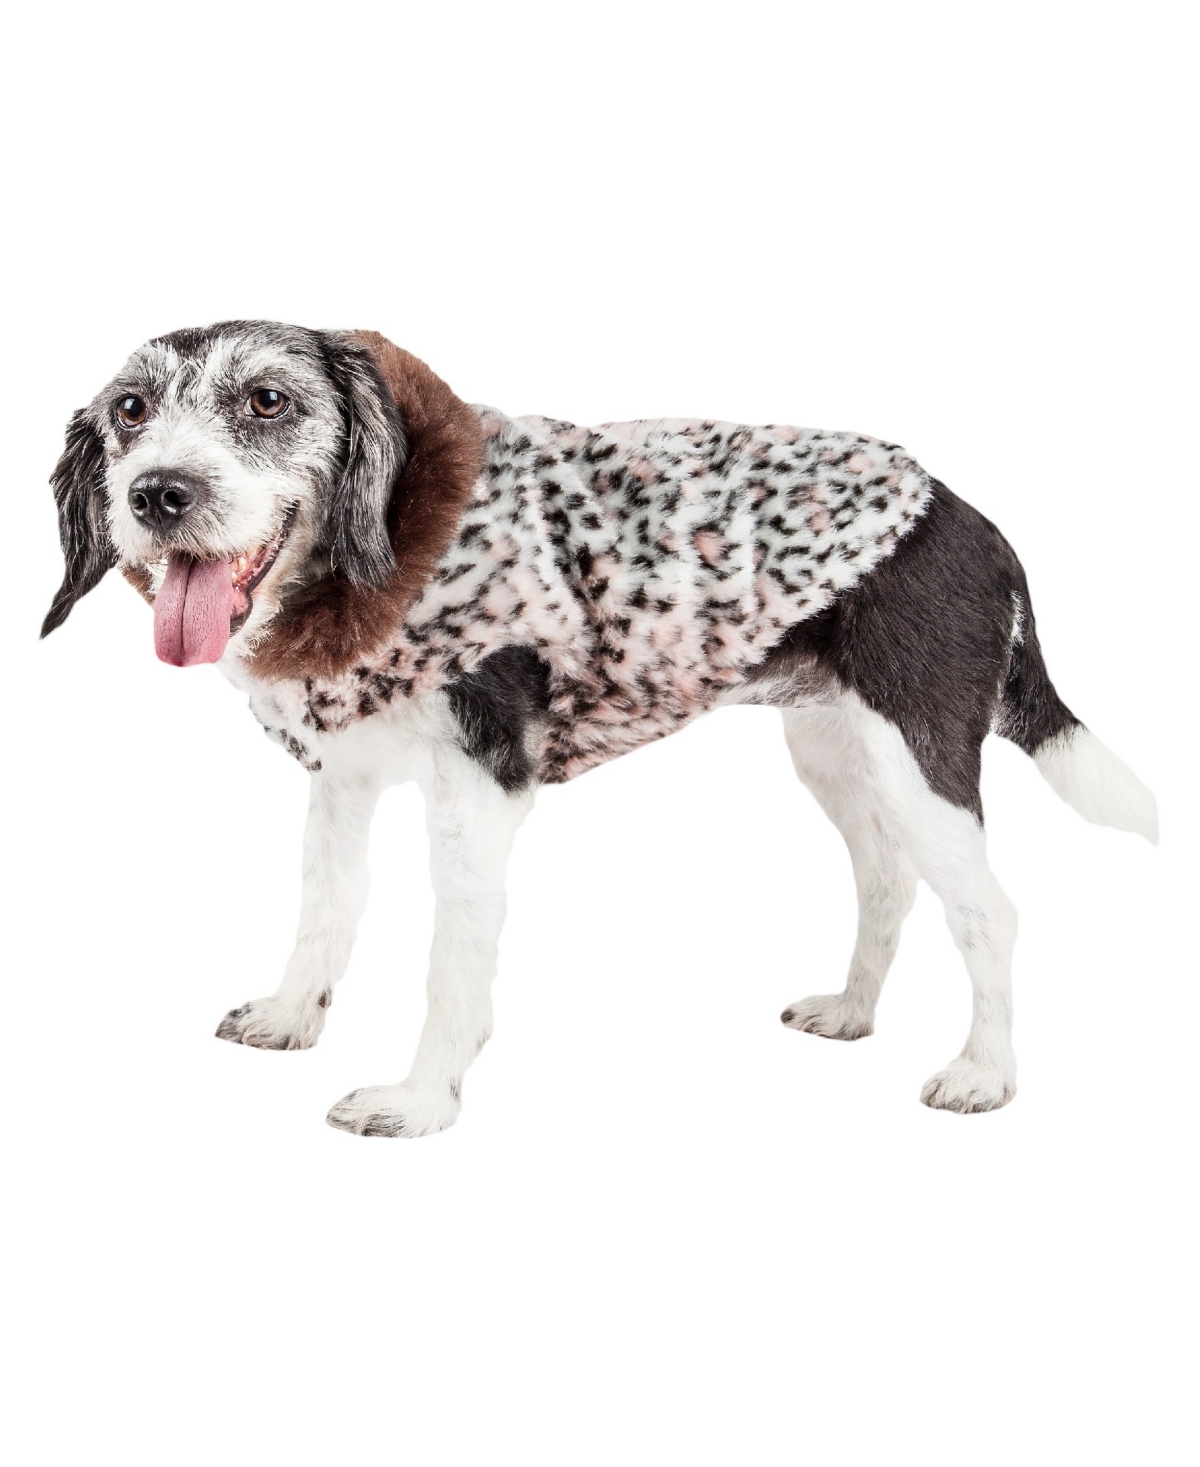 Luxe 'Furracious' Cheetah Patterned Faux Fur Dog Coat Jacket - Pink